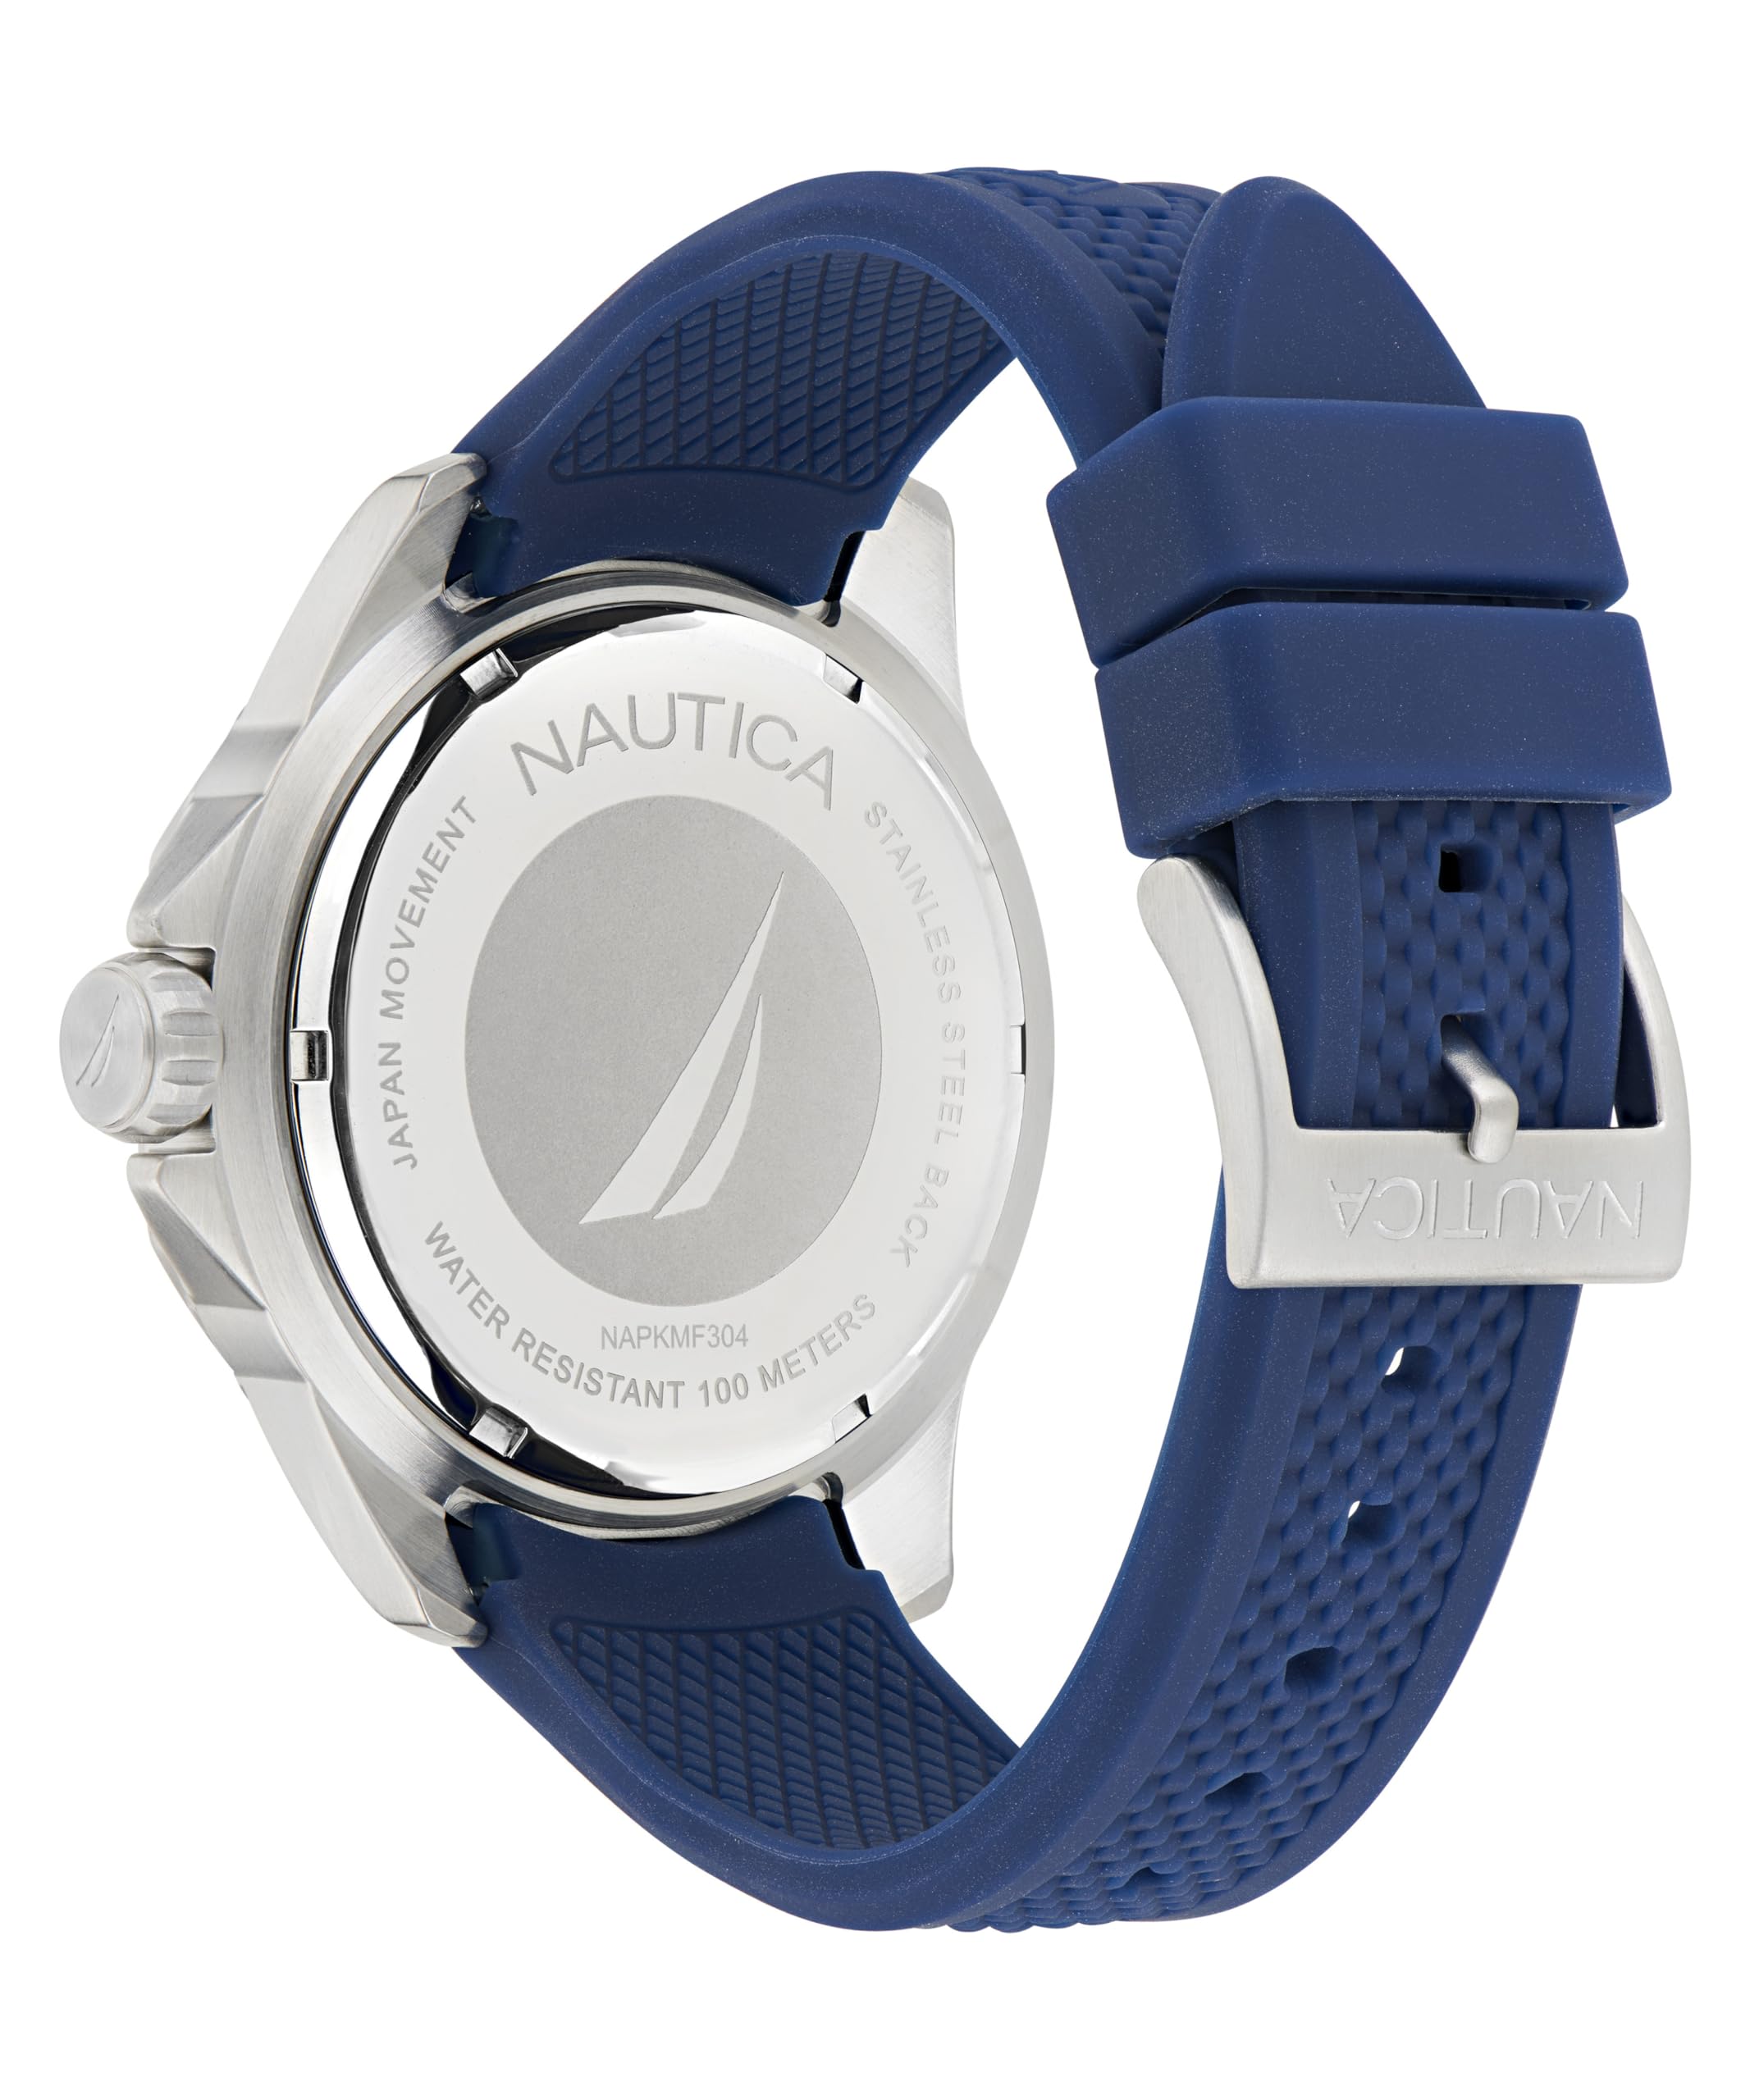 Nautica Men's NAPKMF304 KOH May Bay Blue Silicone Strap Watch